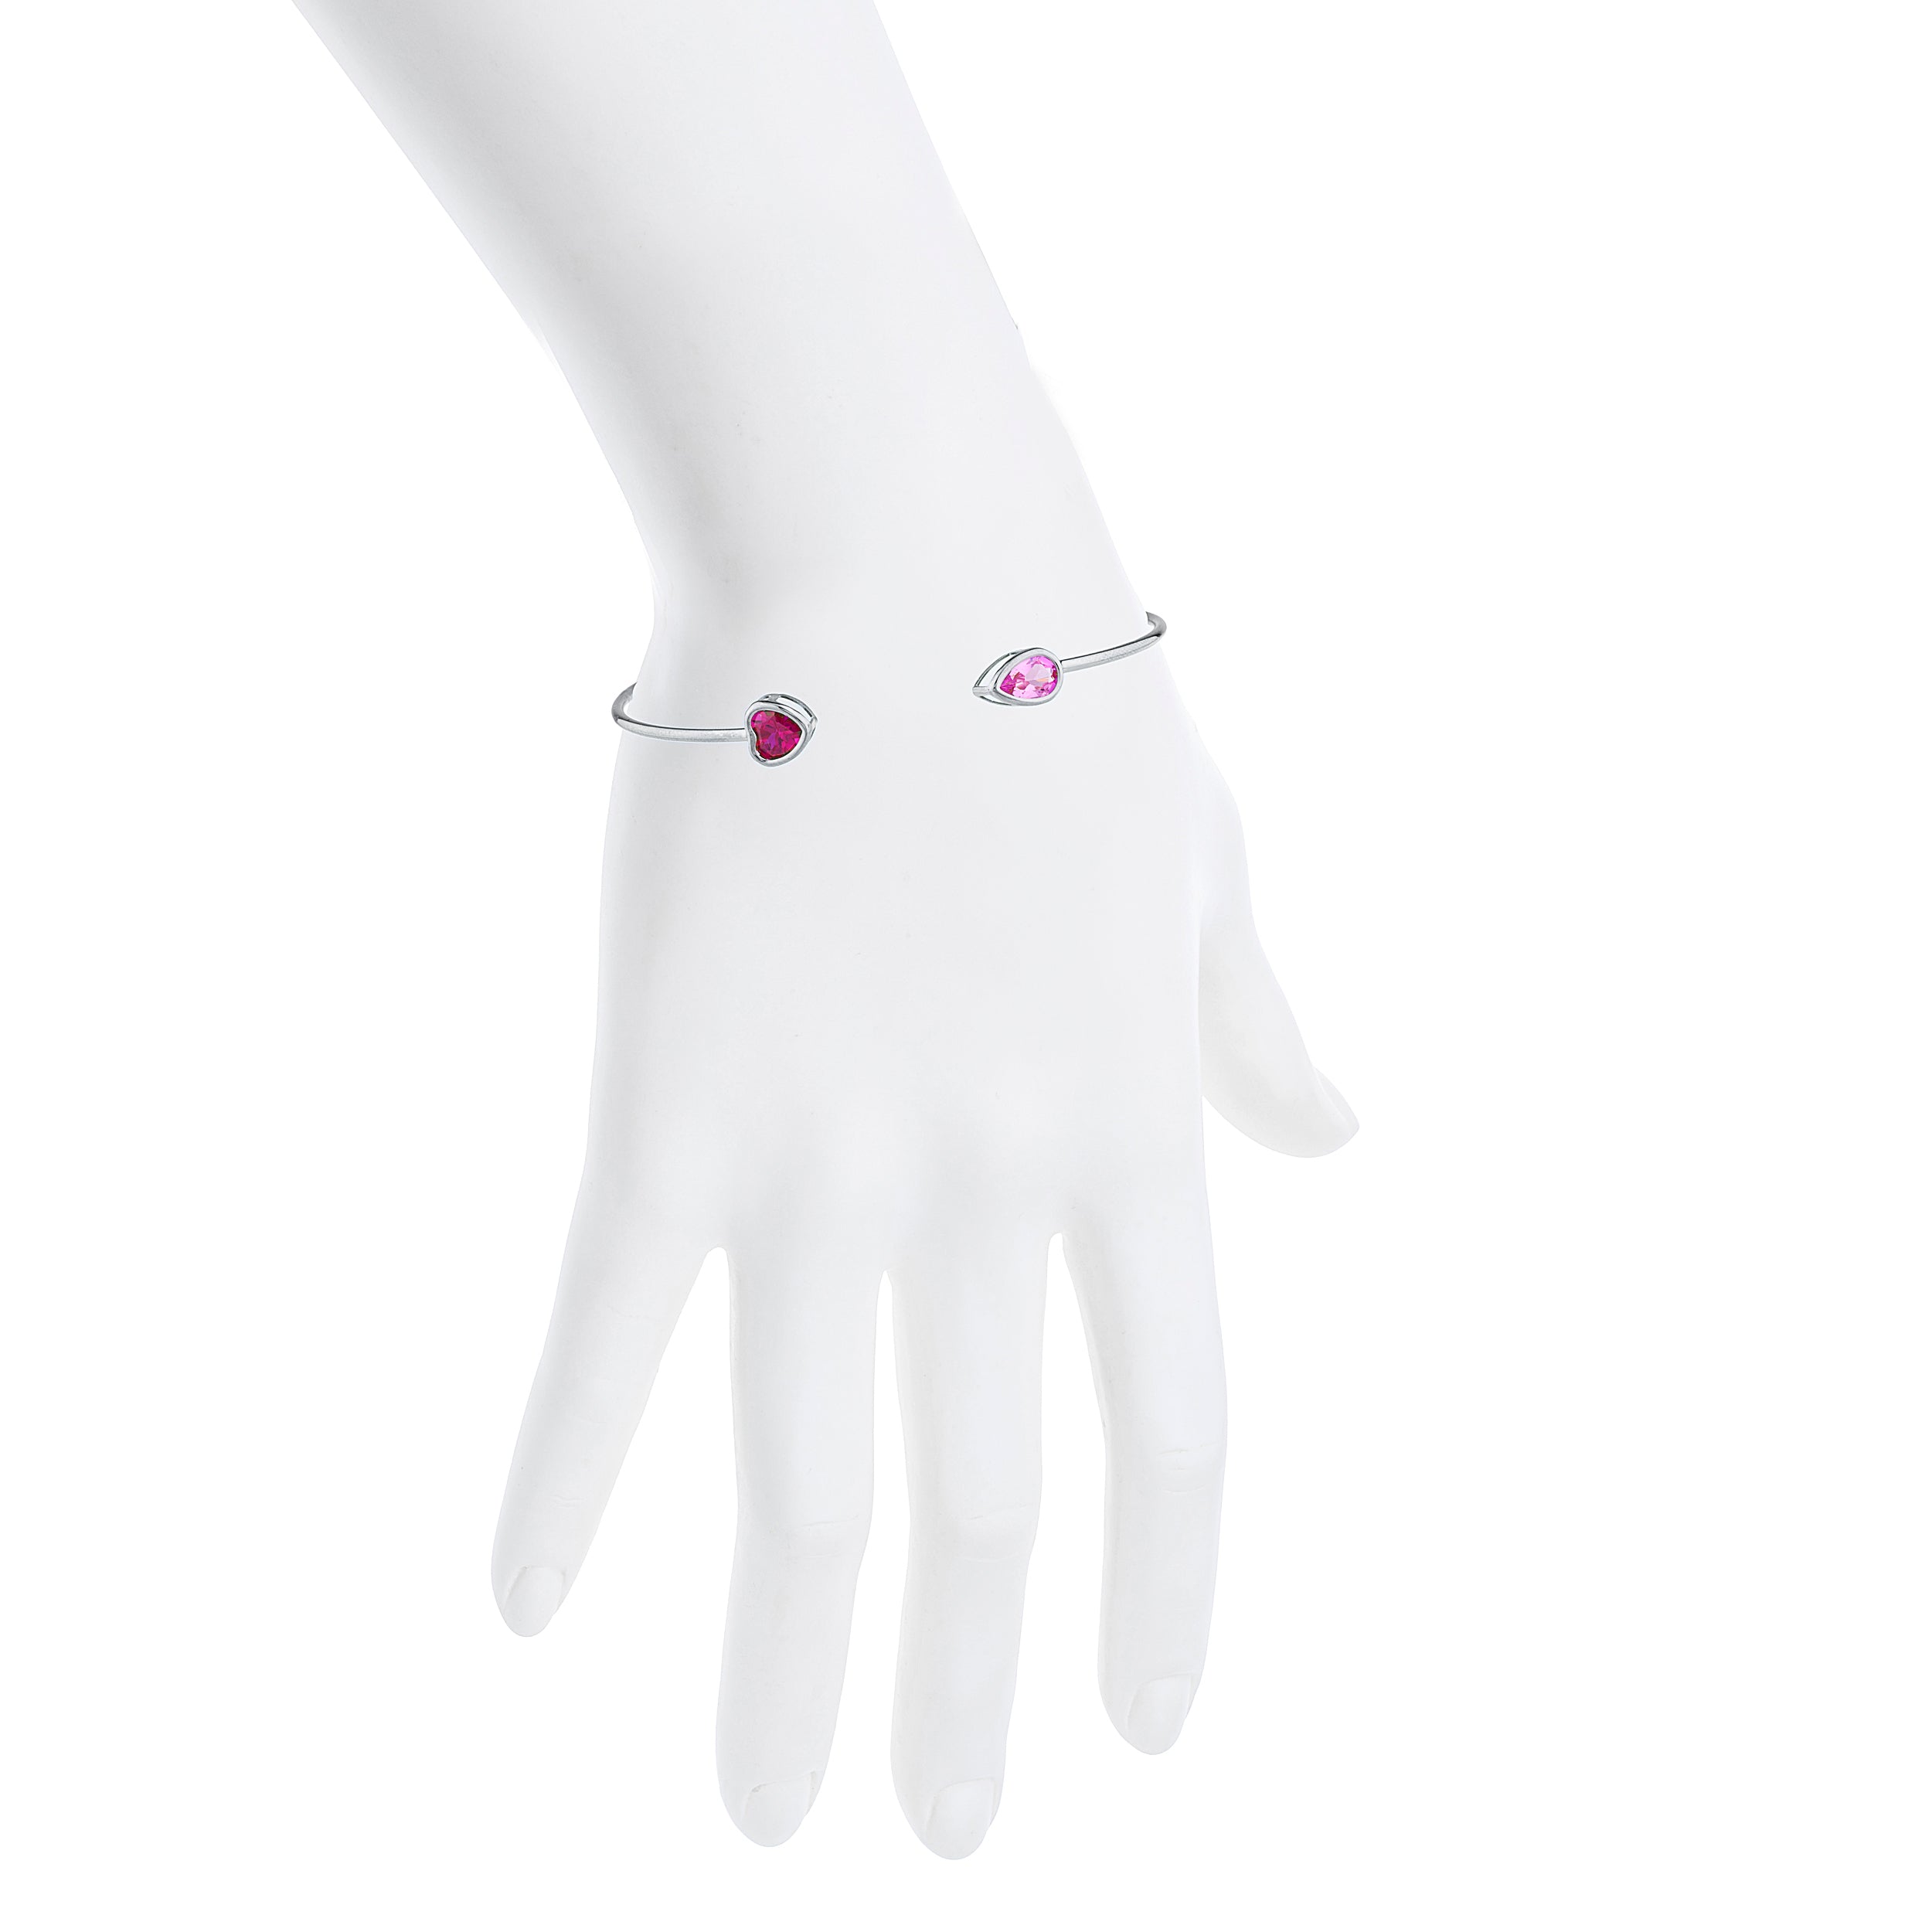 14Kt Gold Created Ruby Heart & Pink Sapphire Pear Bezel Bangle Bracelet